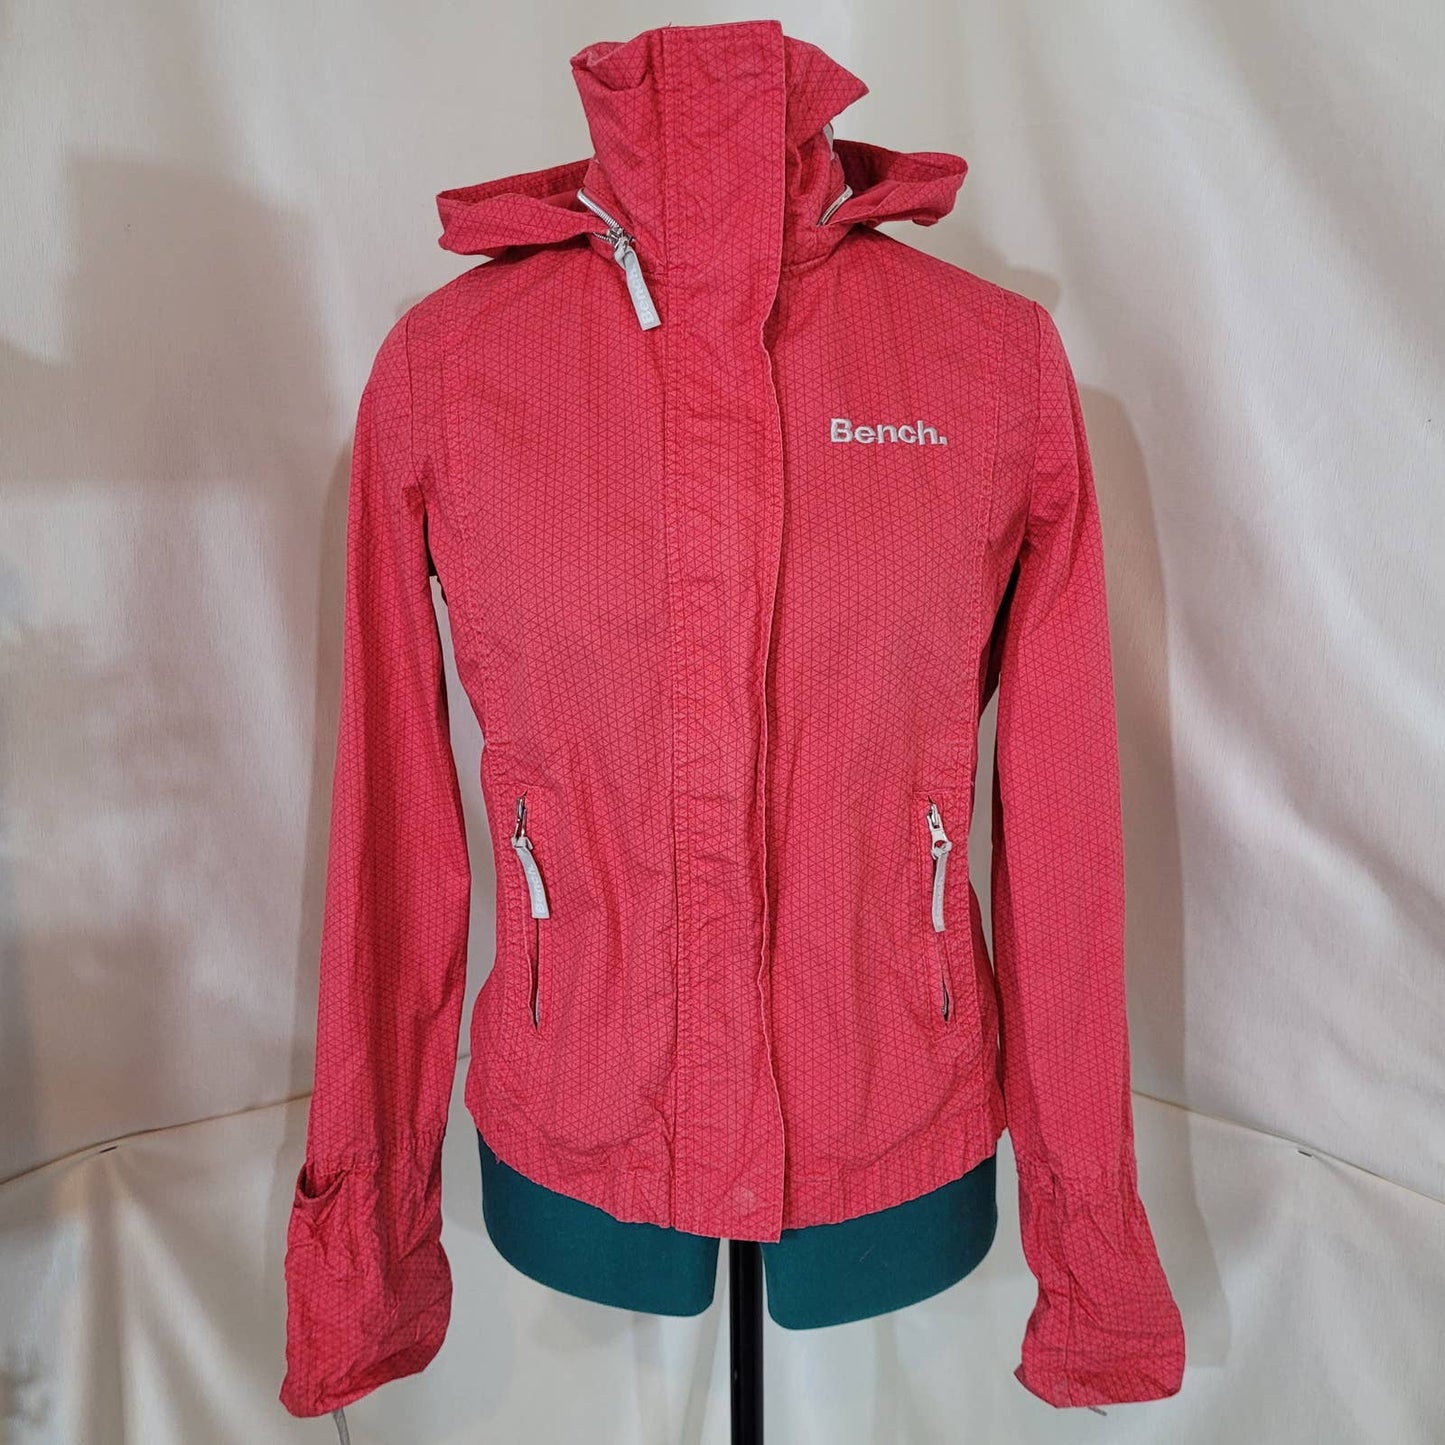 Bench Pink Zip Up Lightweight Jacket - Size Medium